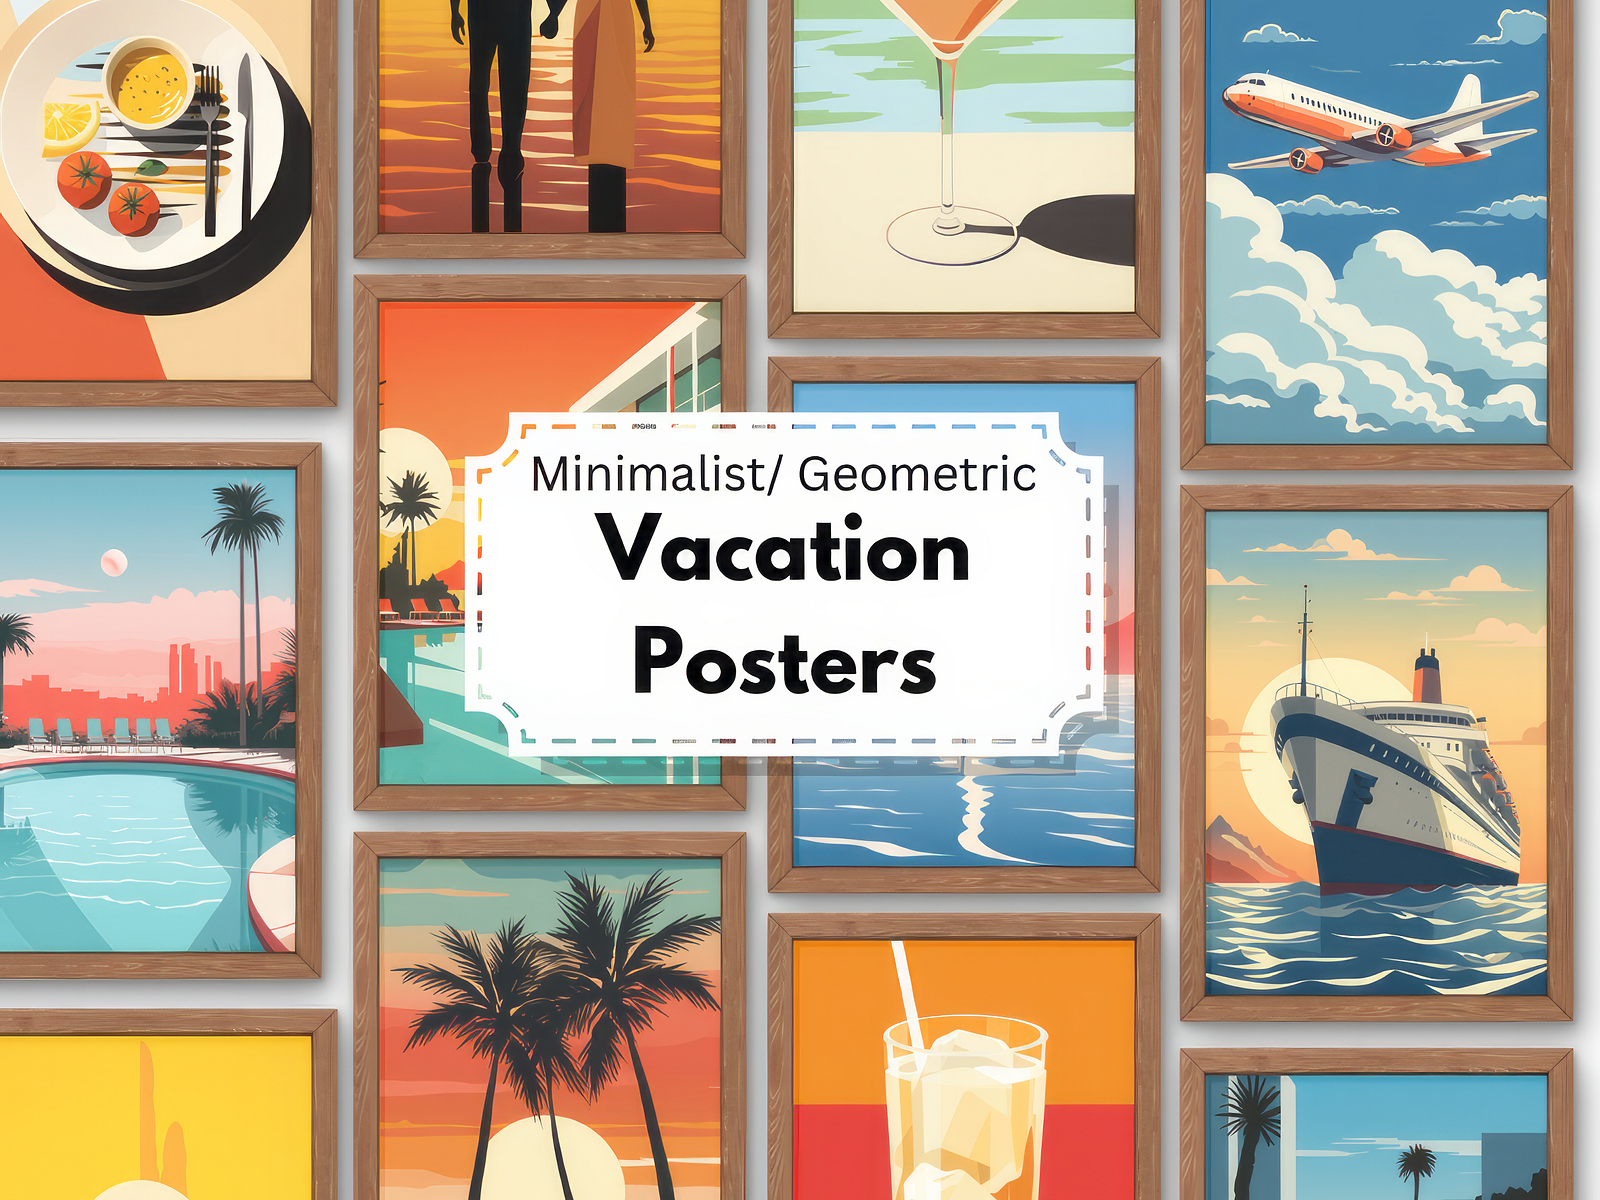 Vacation Posters - Minimalist/Geometric/Vector by Jordan Kaufman on Dribbble